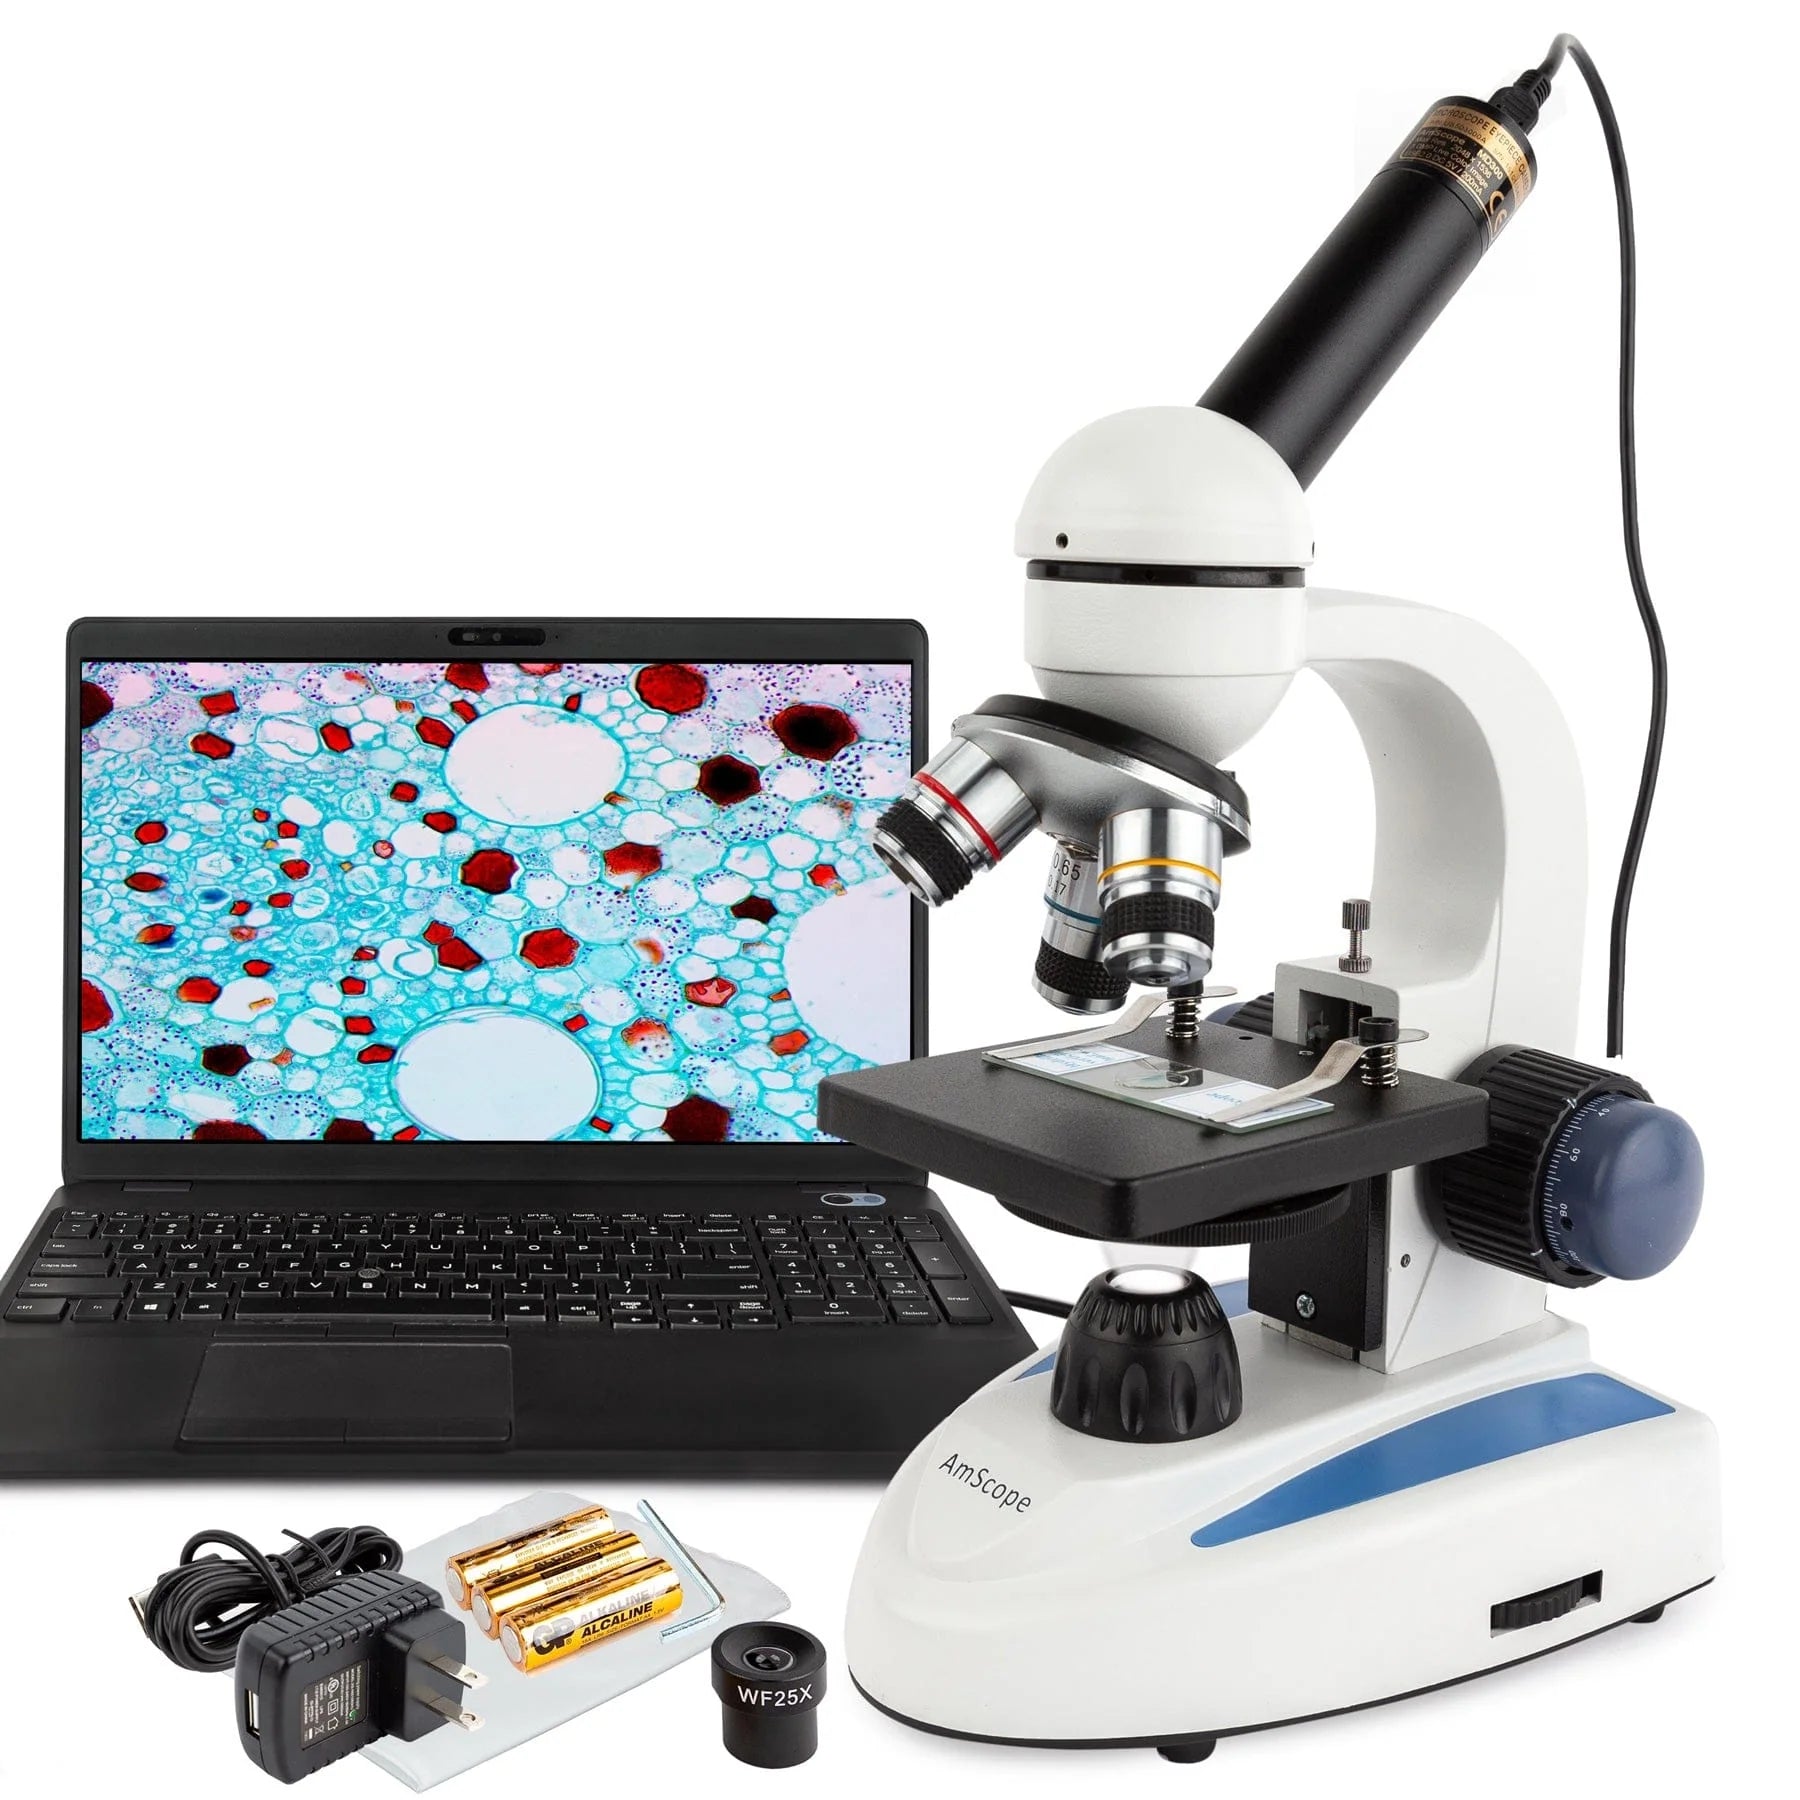 Amscope Monocular Microscope 360 Rotating Head + USB Camera / 40X-1000X